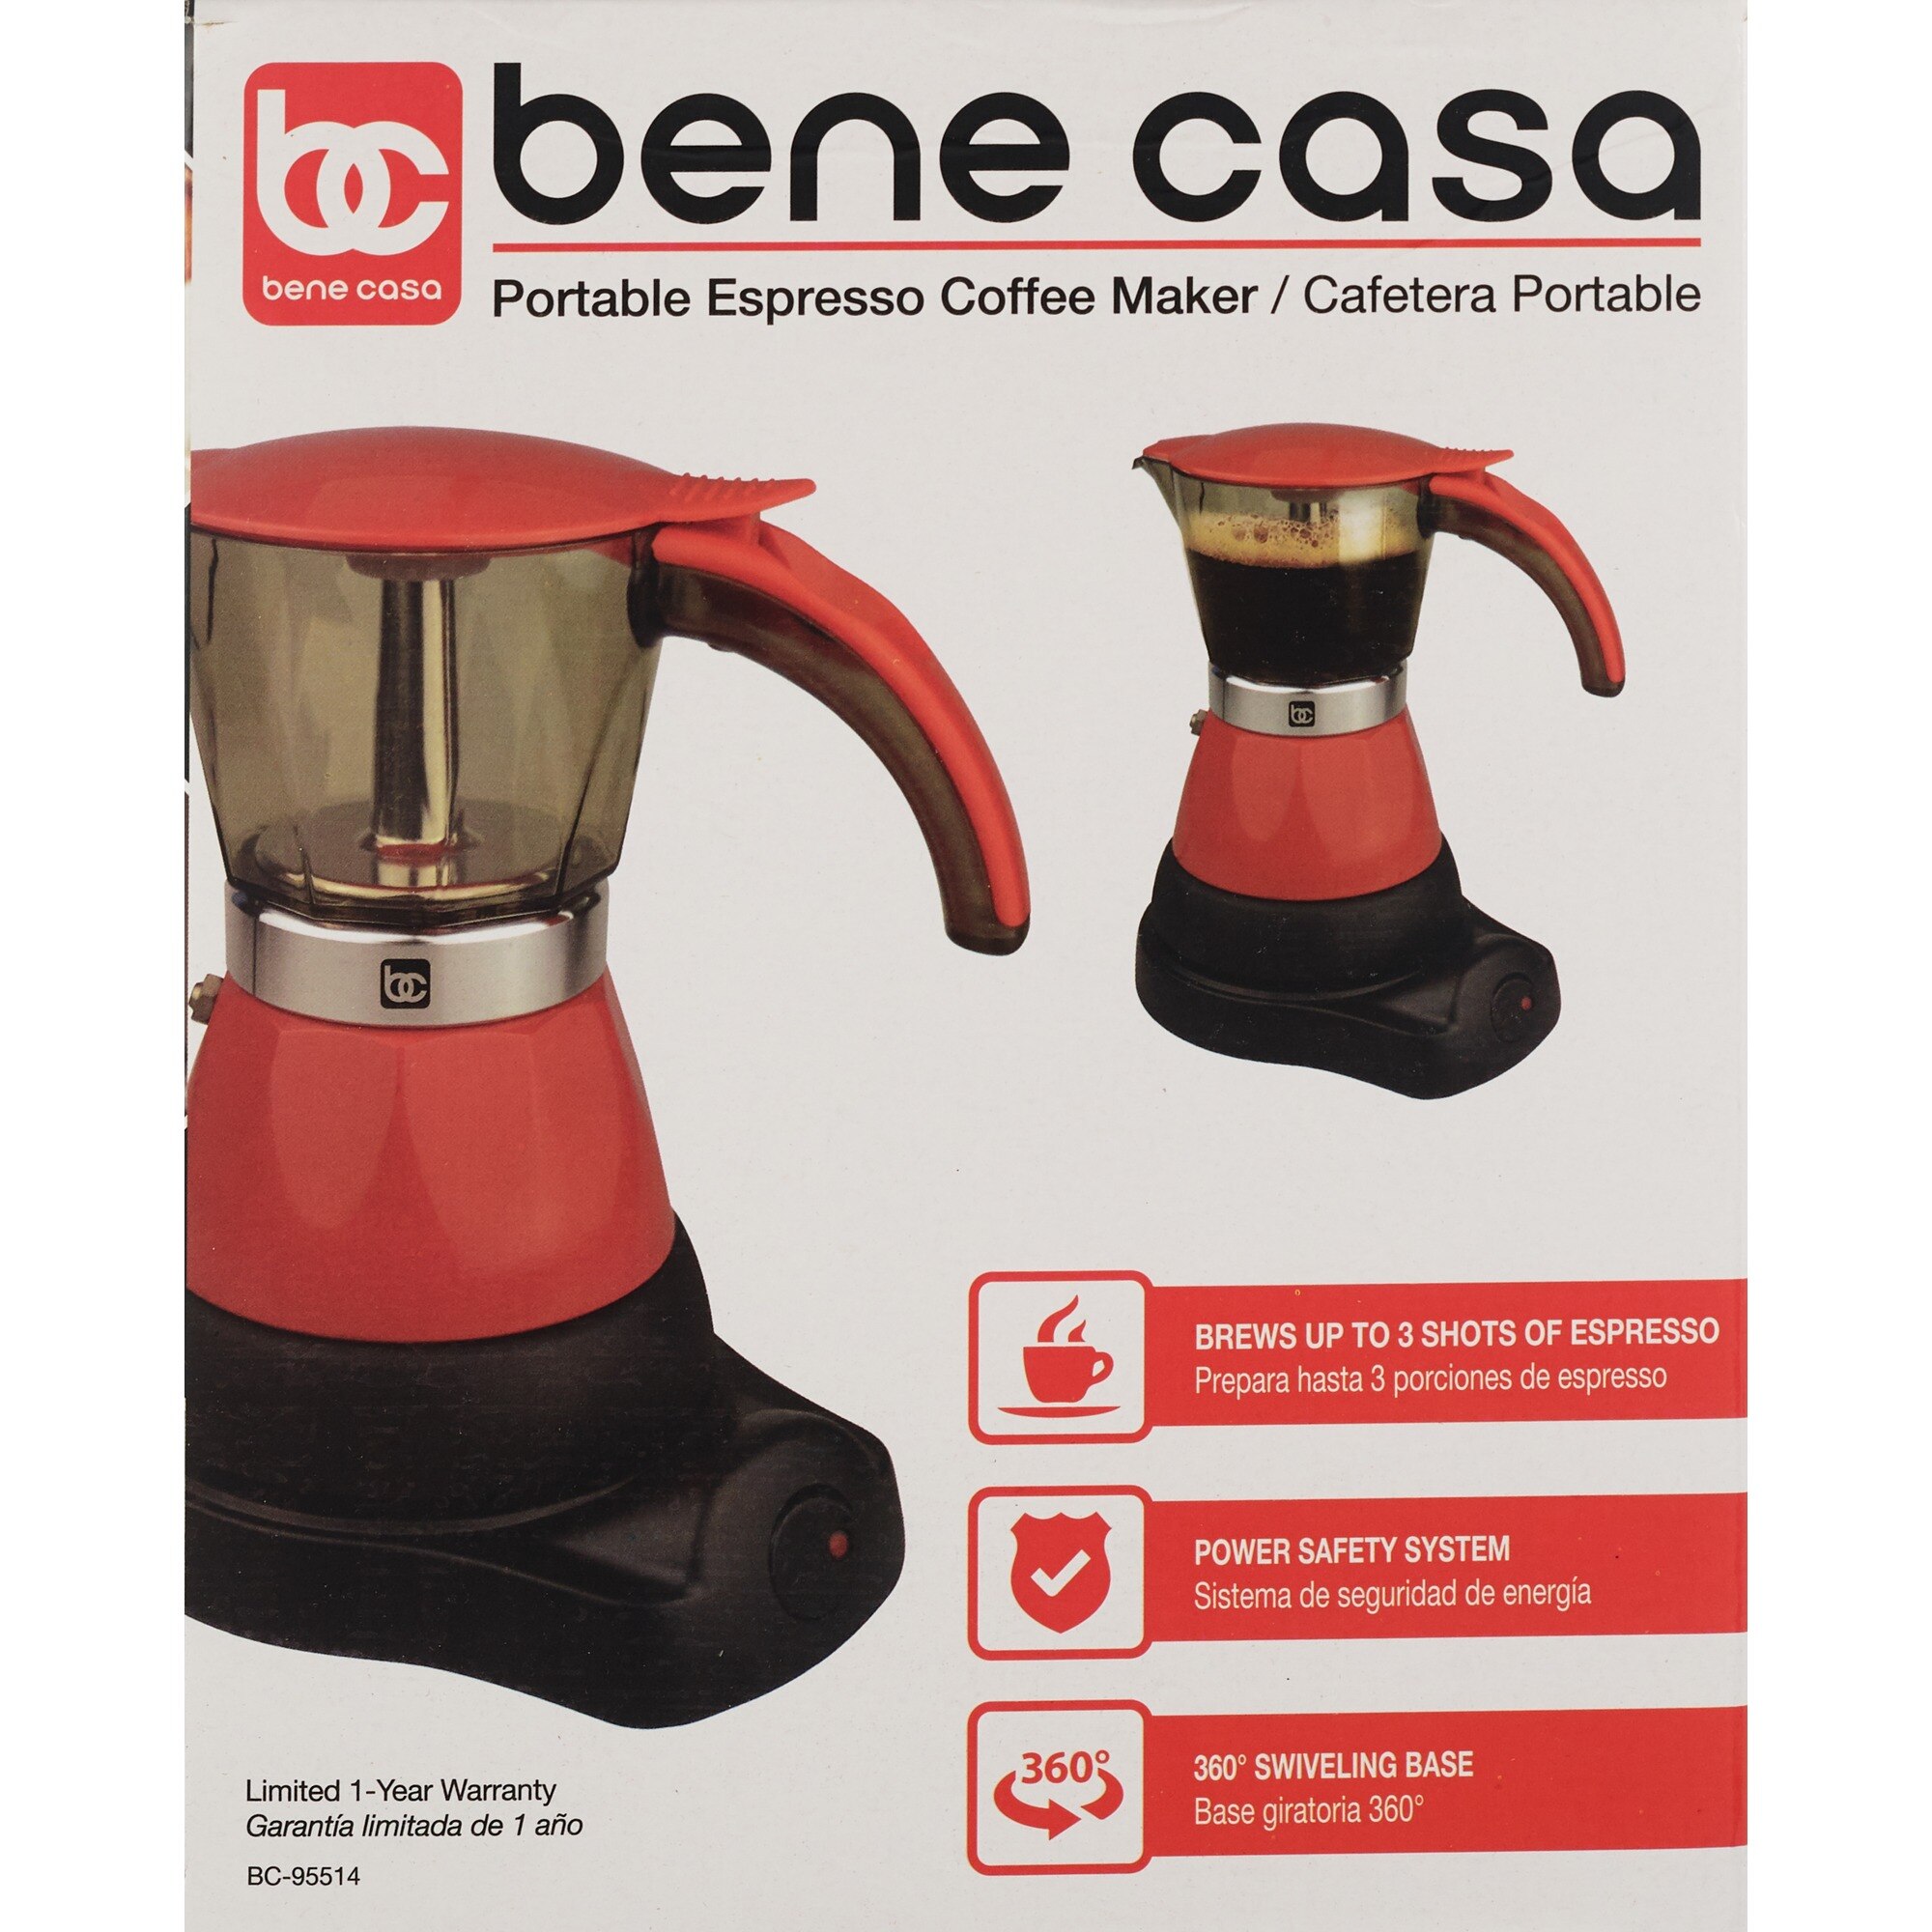 Reseñas de clientes: Bene Casa Electric Espresso Maker/Cafetera, Red, 3 CUP  - CVS Pharmacy